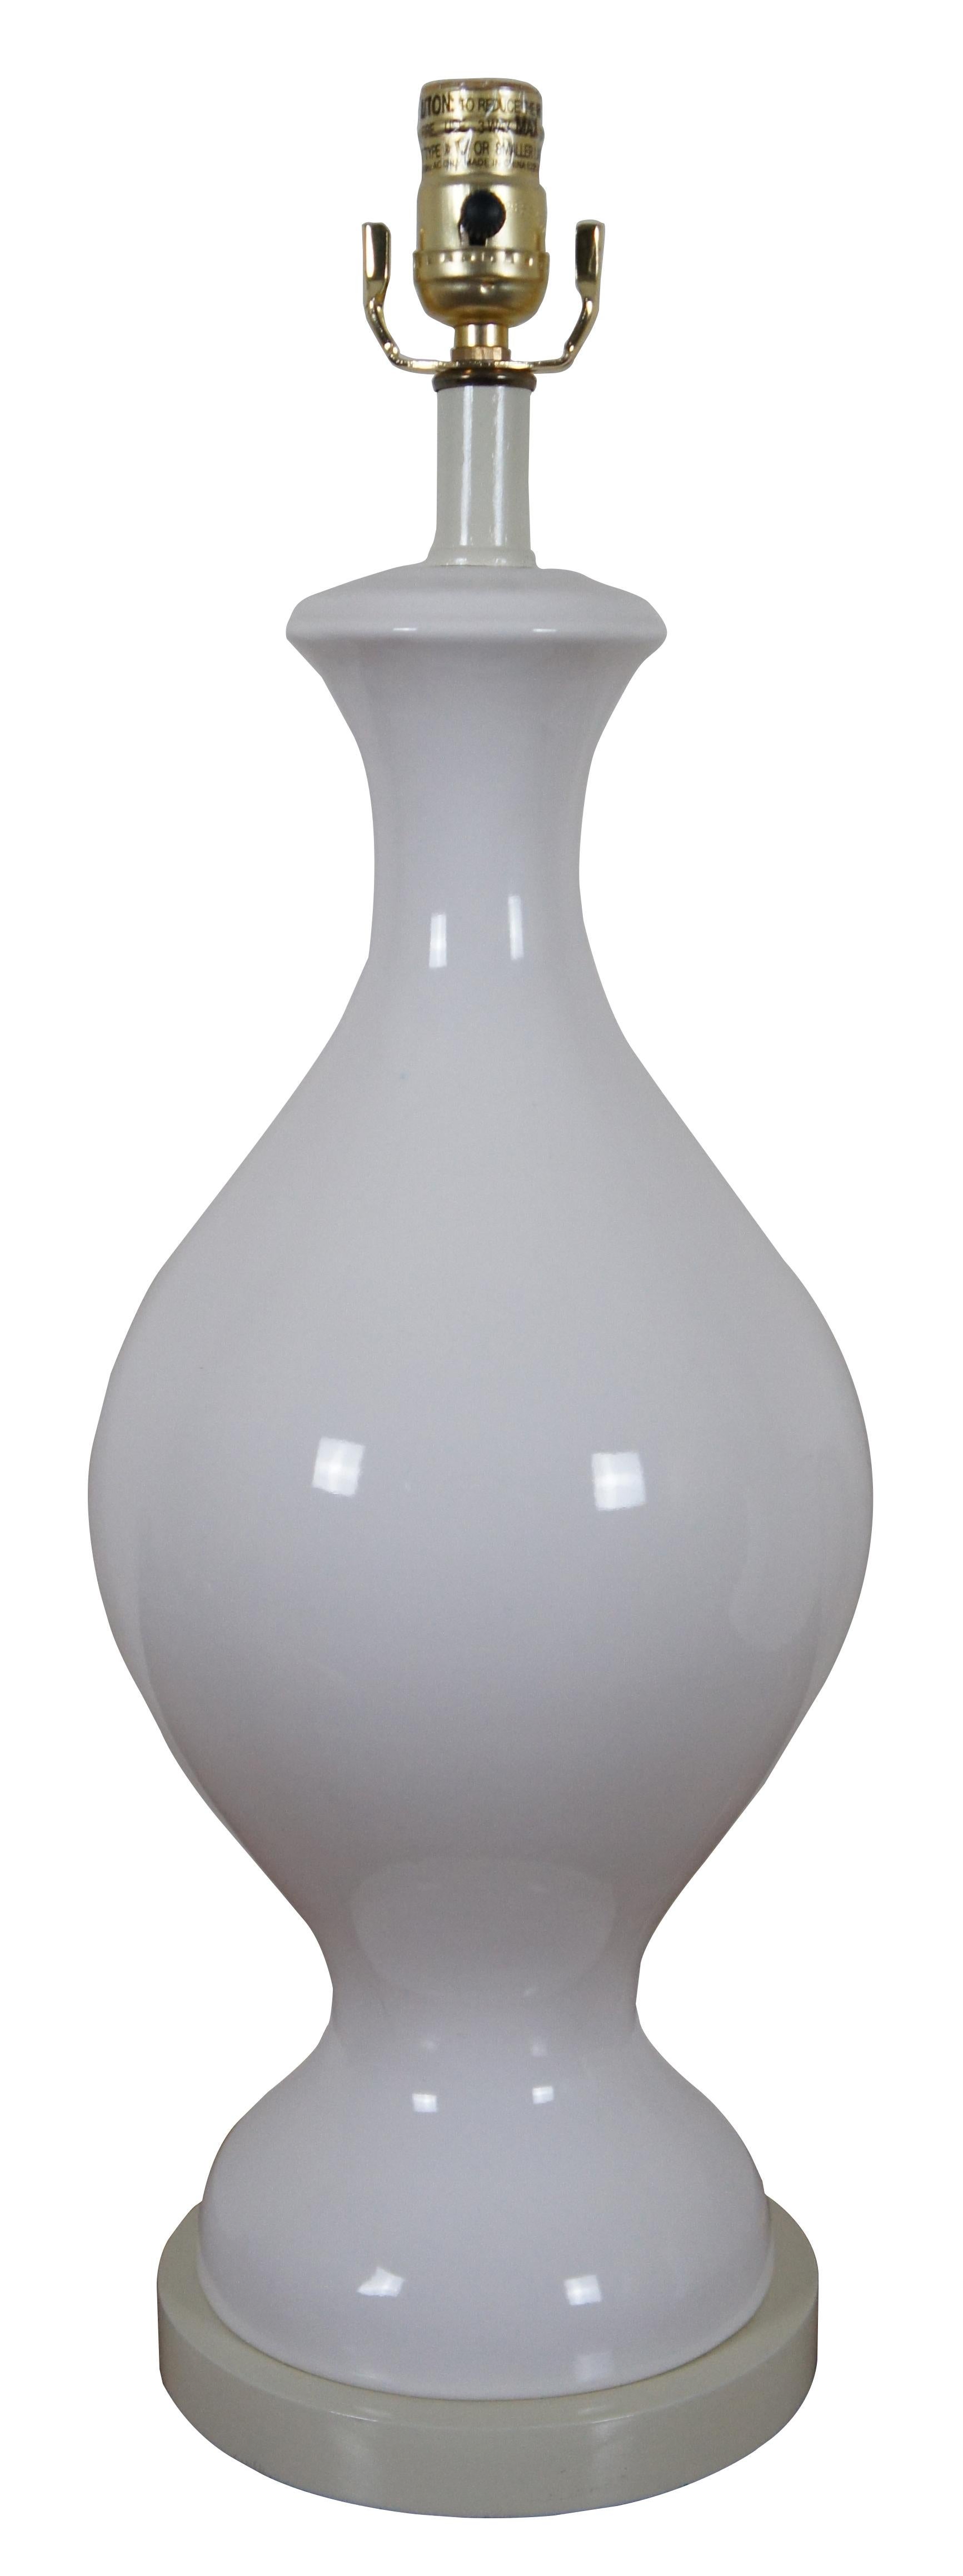 Neoclassical Vintage White Ceramic Urn Vase Shaped Table Lamp & Shade w Wood Base